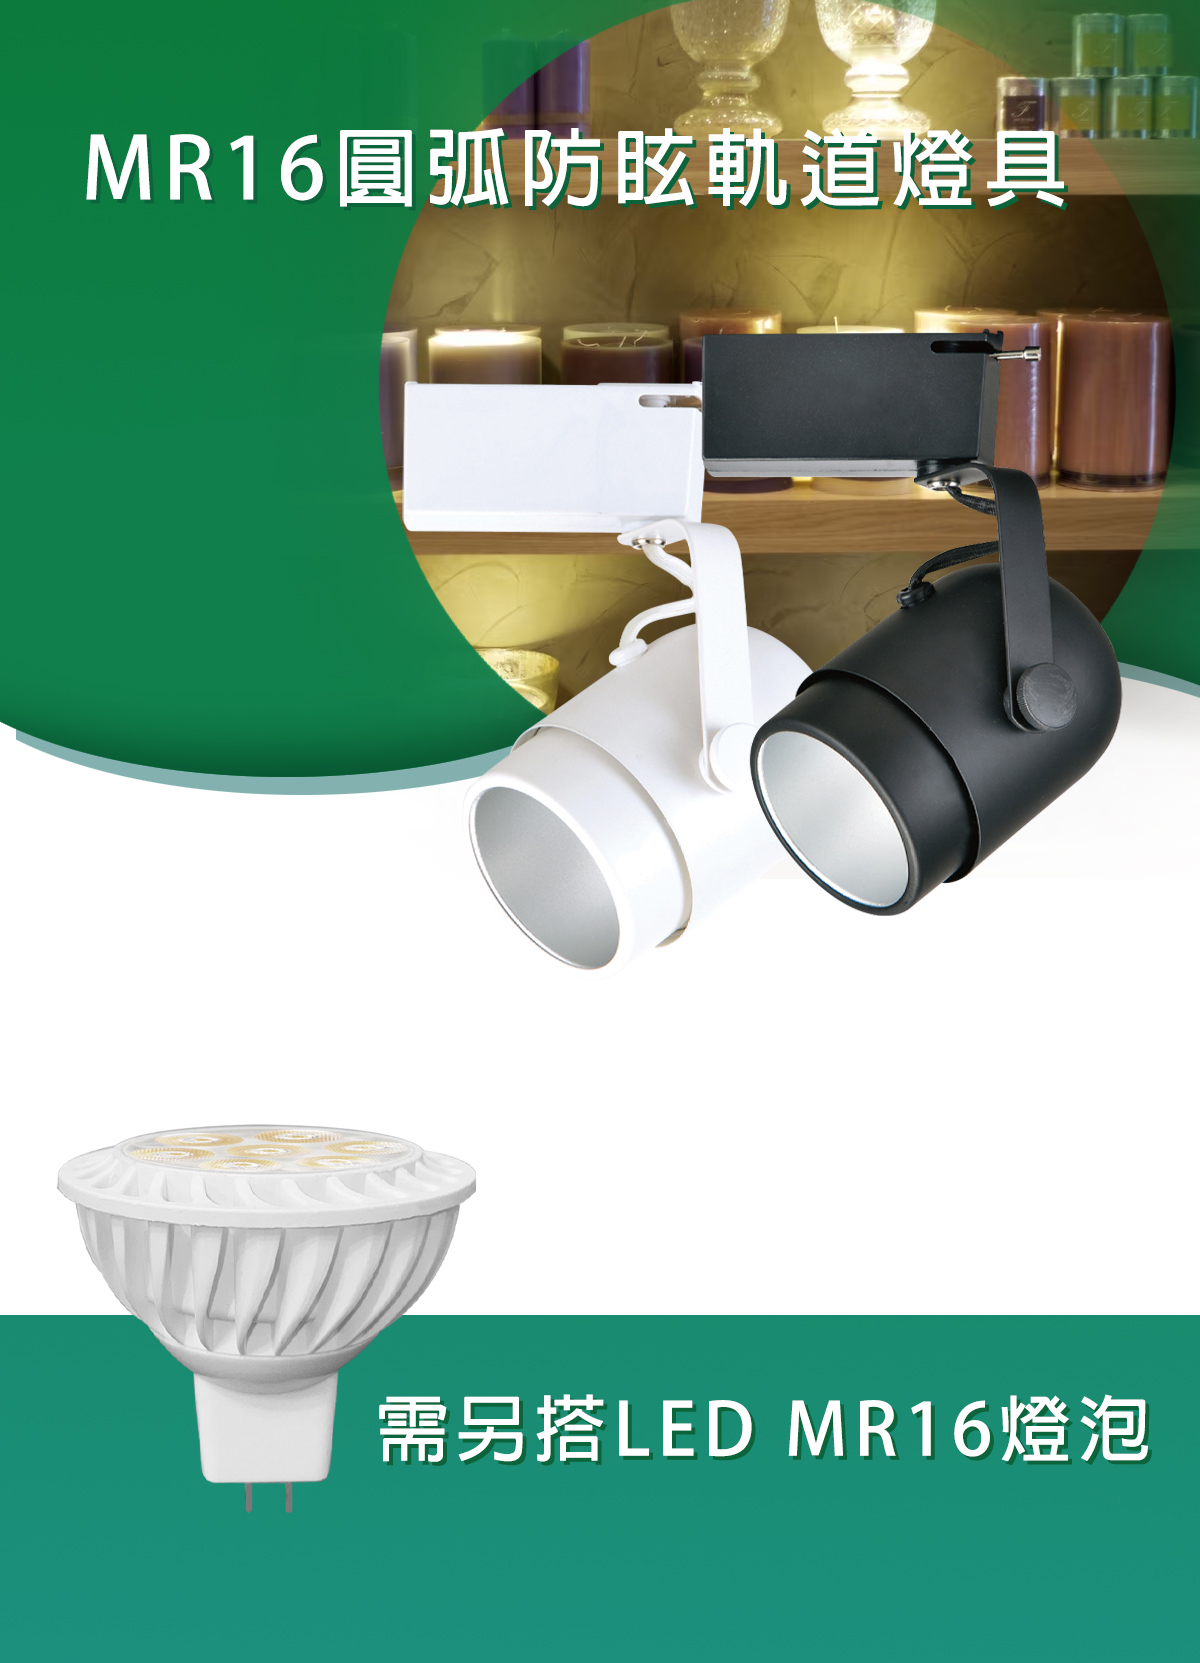 【KAO'S】LED 防眩 可替換燈泡型軌道燈 需搭配MR16杯燈(另計)